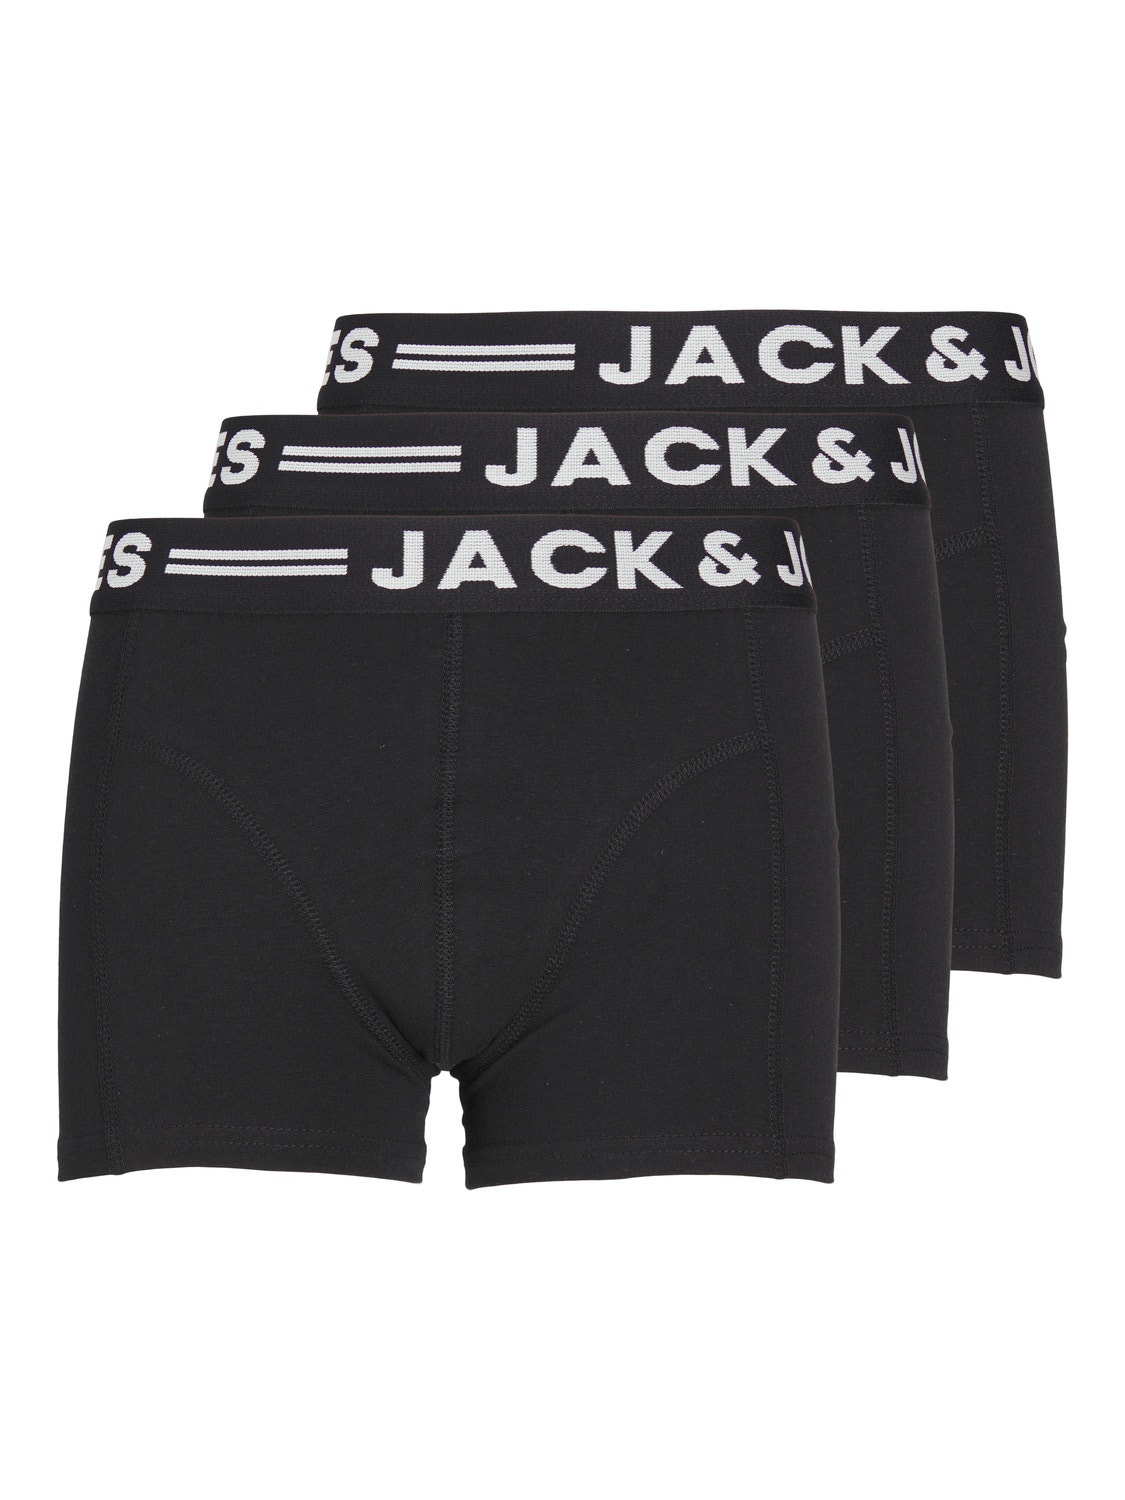 Jack & Jones 3-pack Trunks Mini -Black - 12256698